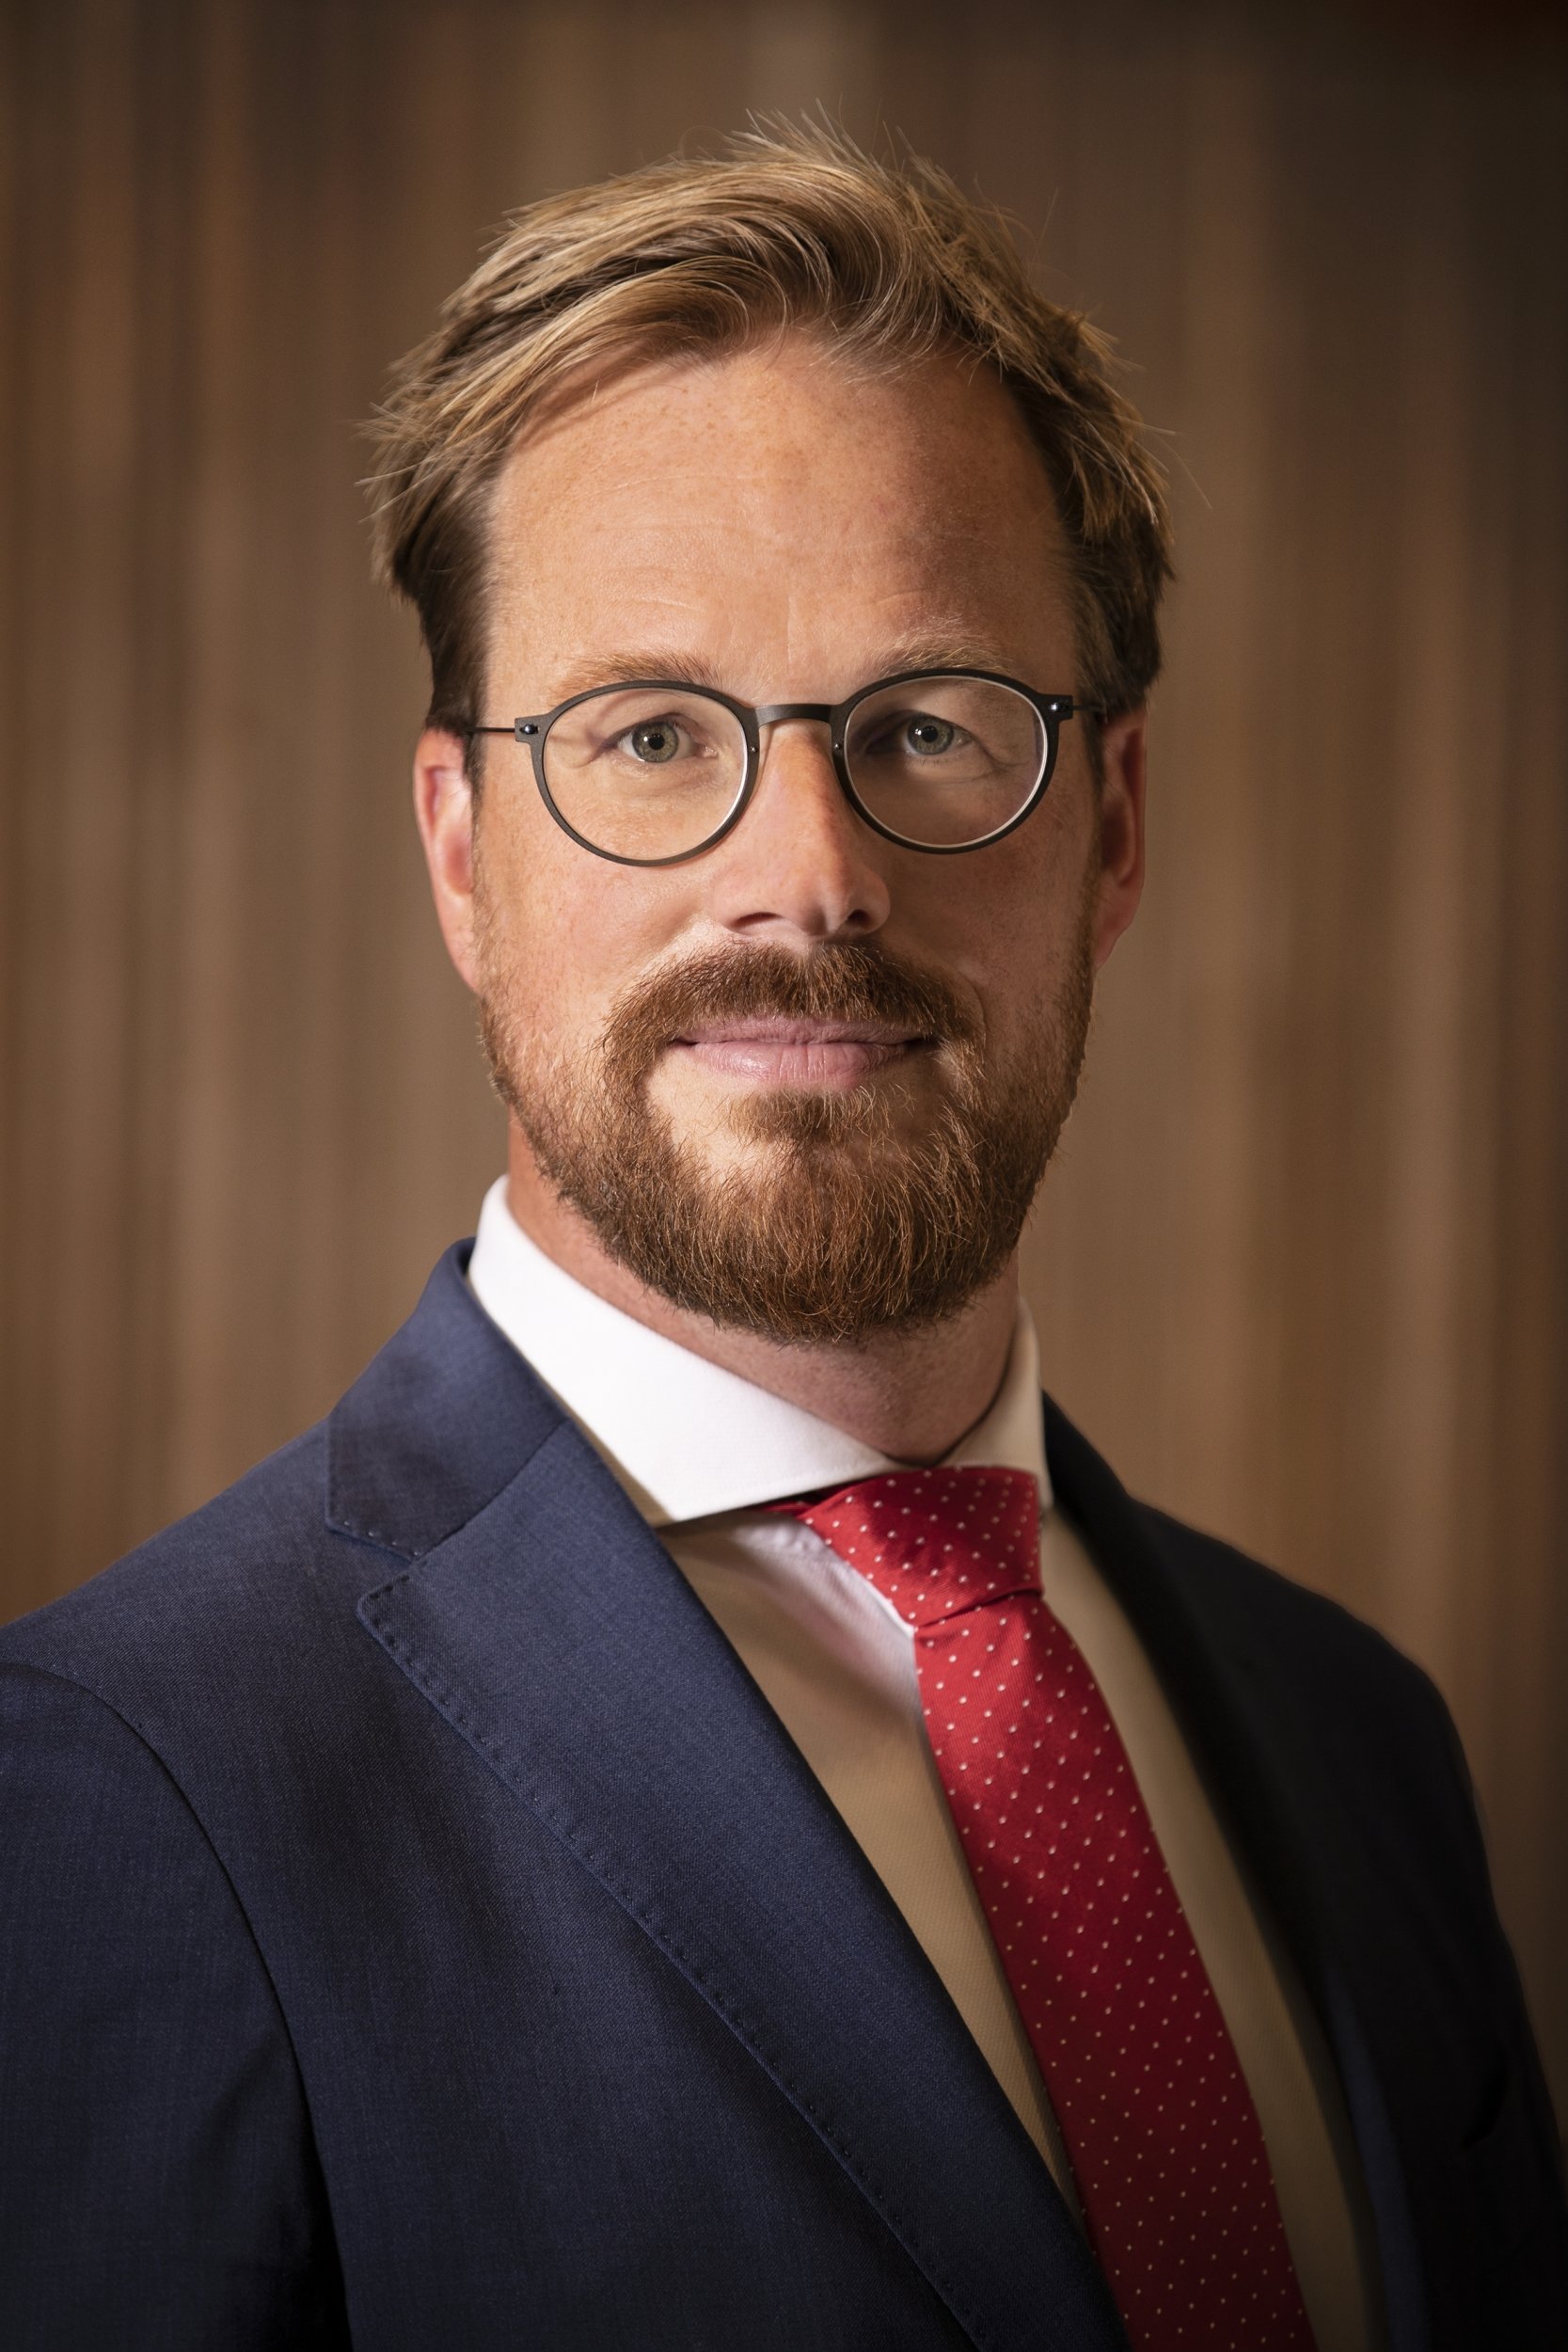 Portretfoto Wethouder Rik van Niejenhuis close-up